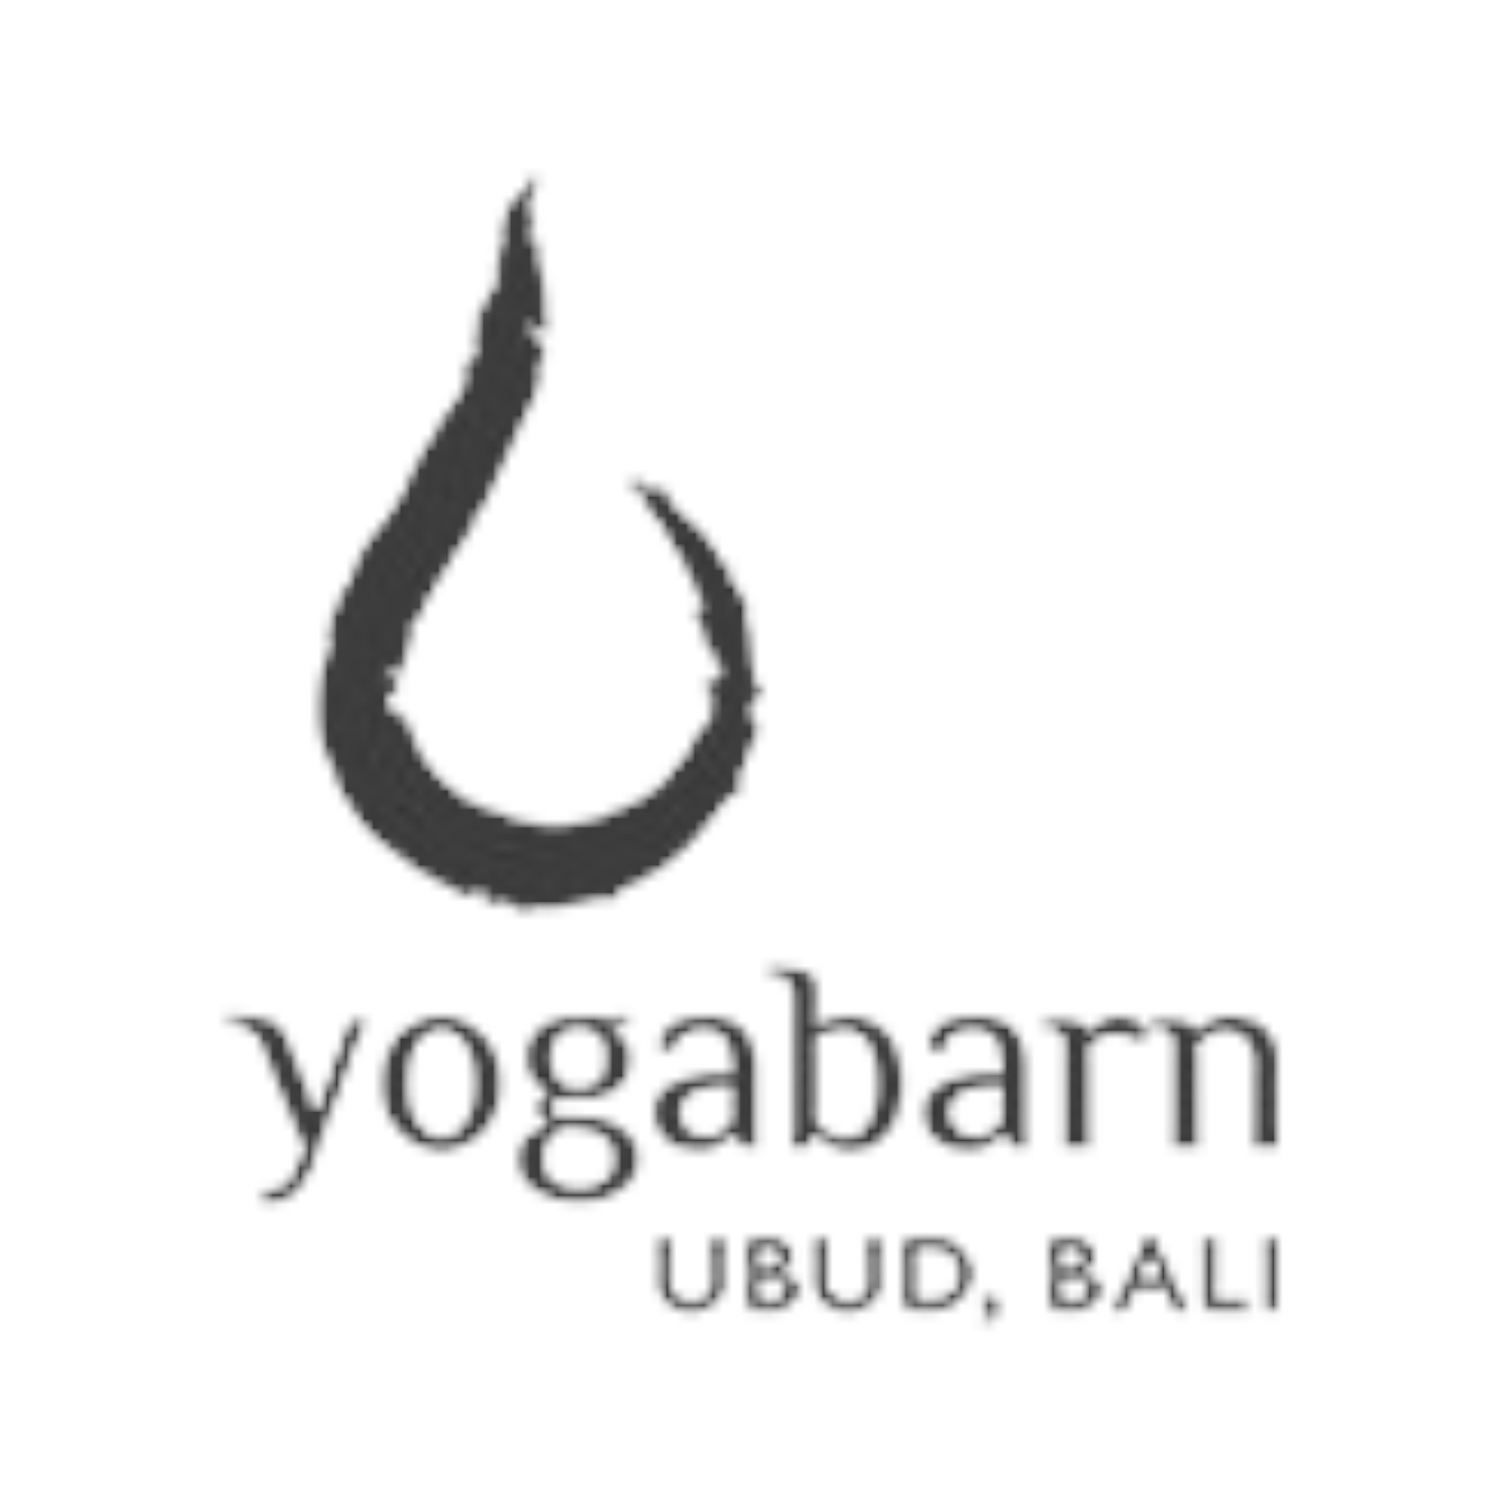 the yoga barn bali yoga community